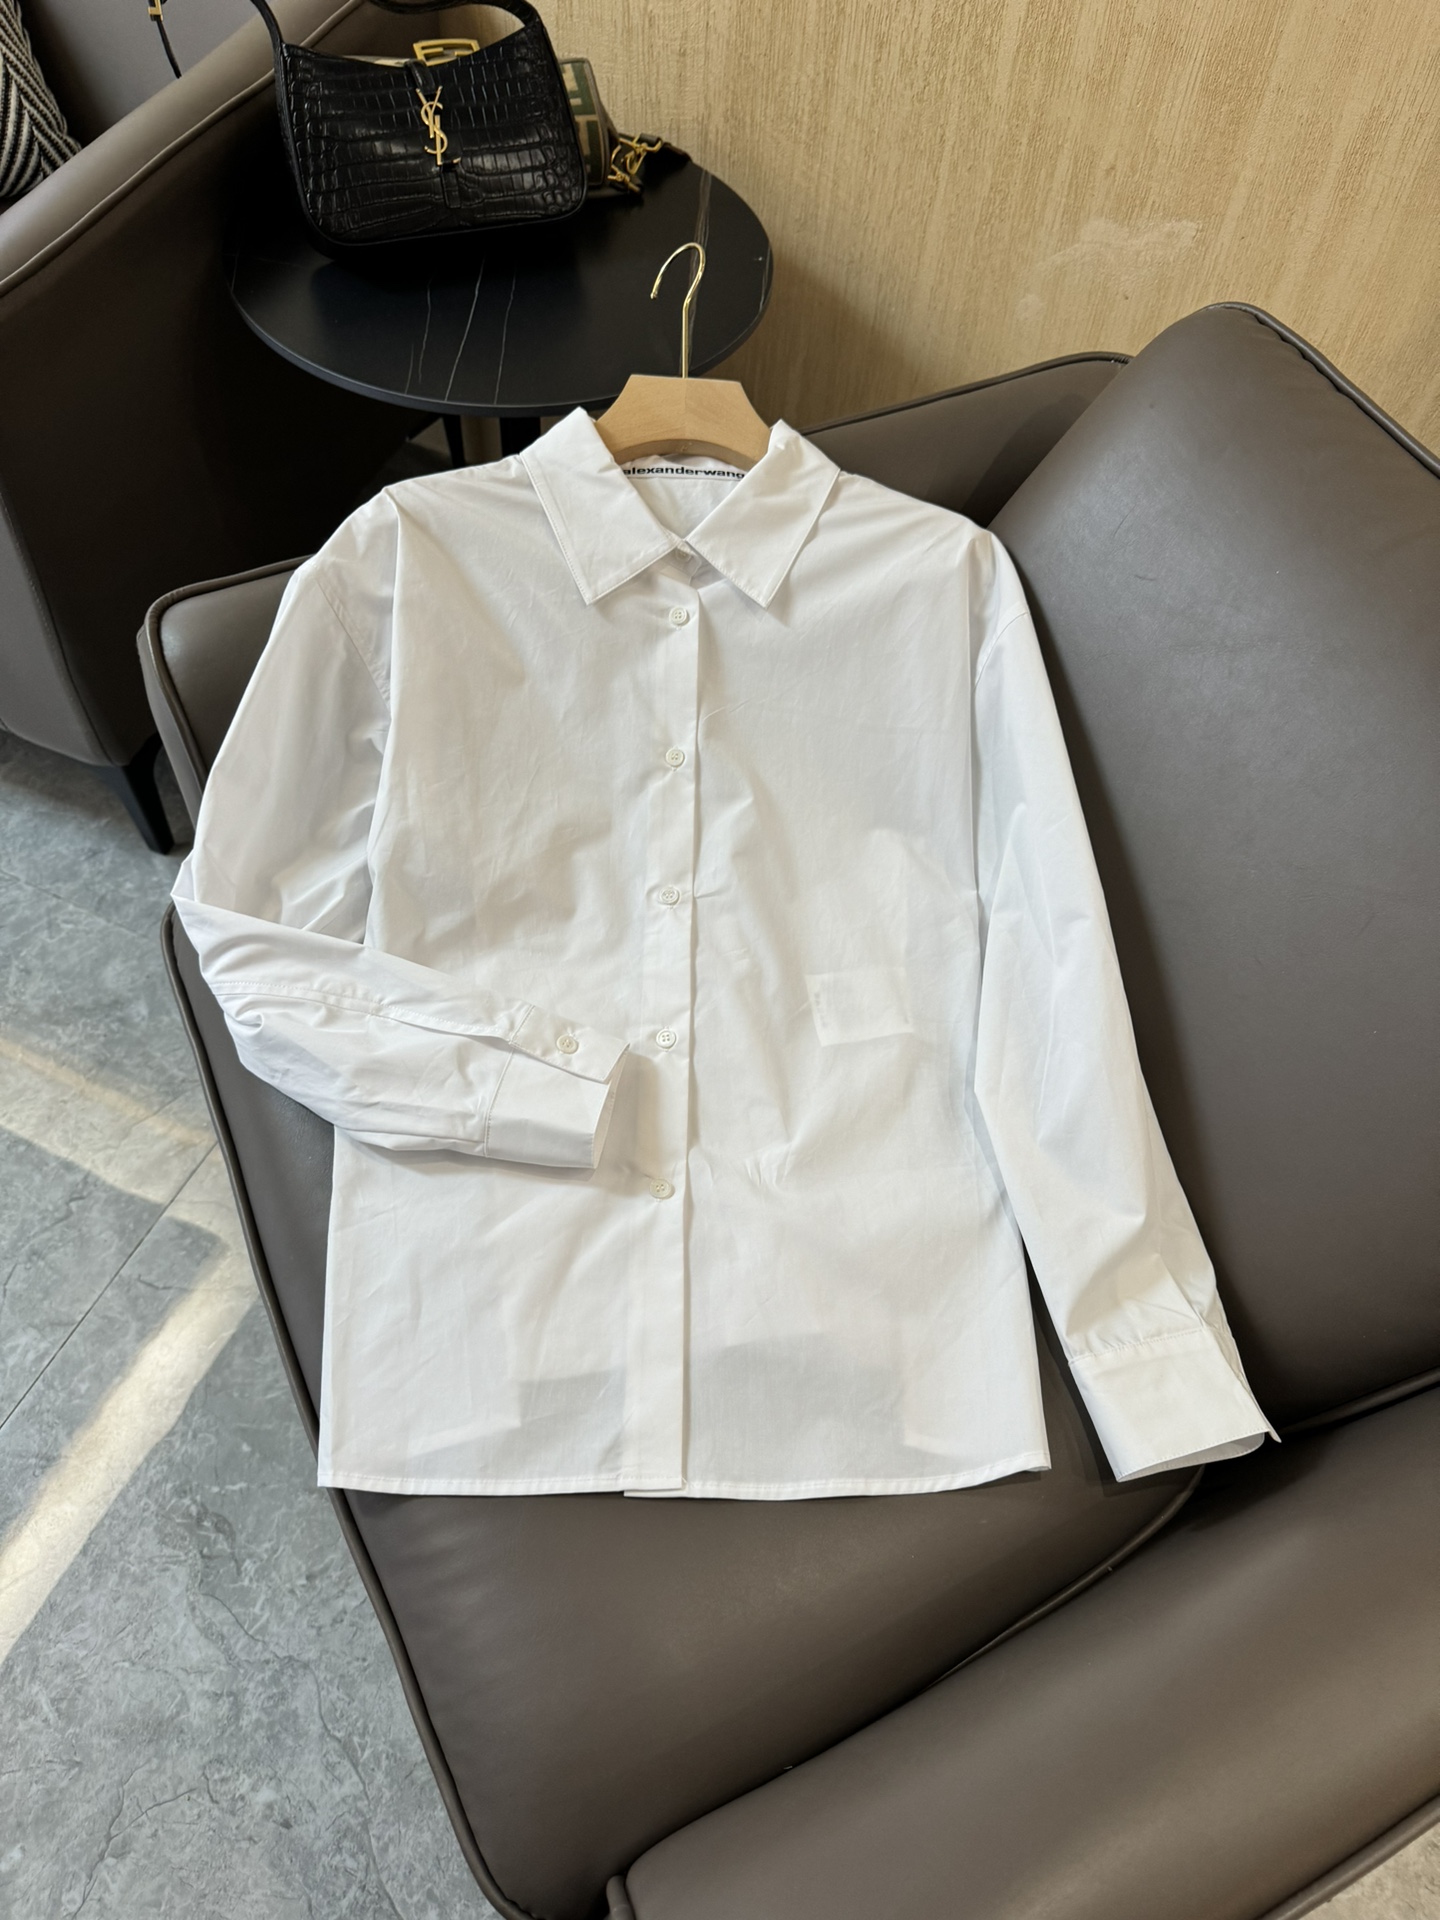 XZzsdqw09#新款衬衫⚠️Pzldbdalexanderwang 大王 显瘦款 原版1:1 最高版 长袖衬衫 白色 SMLXL